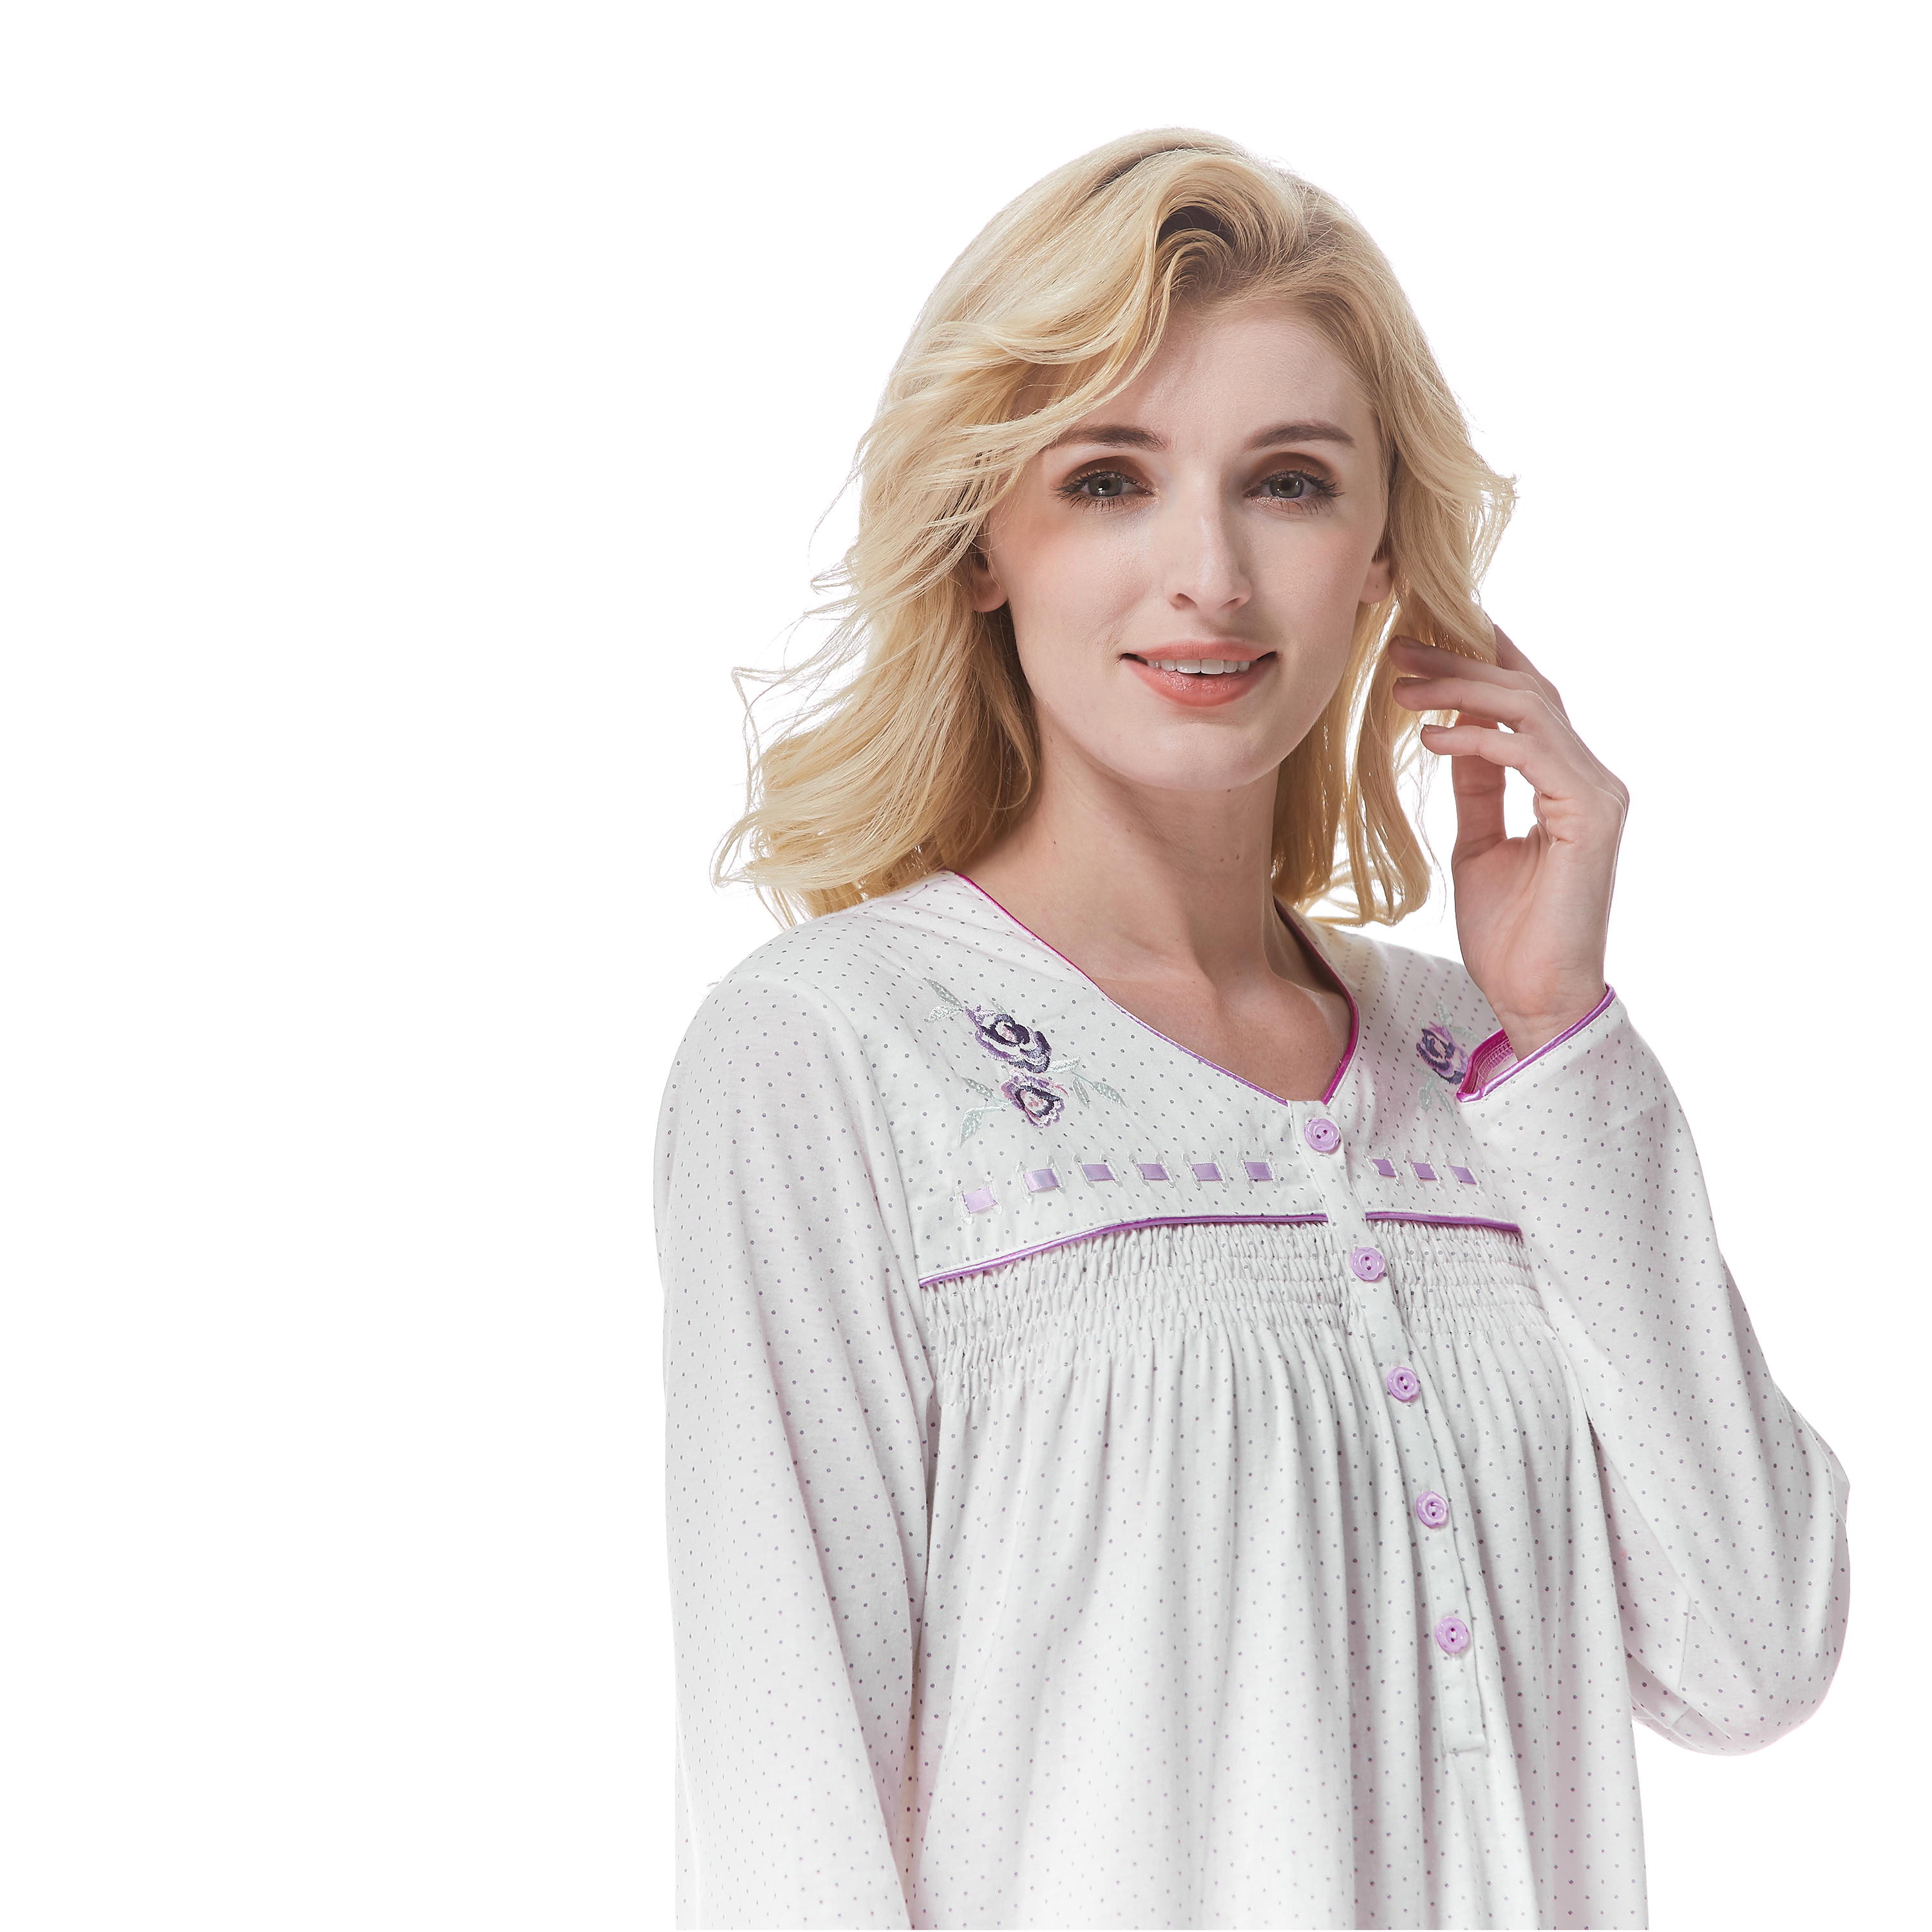 Keyocean Women's Nightgowns 100% Cotton Lace Trim Short Sleeve